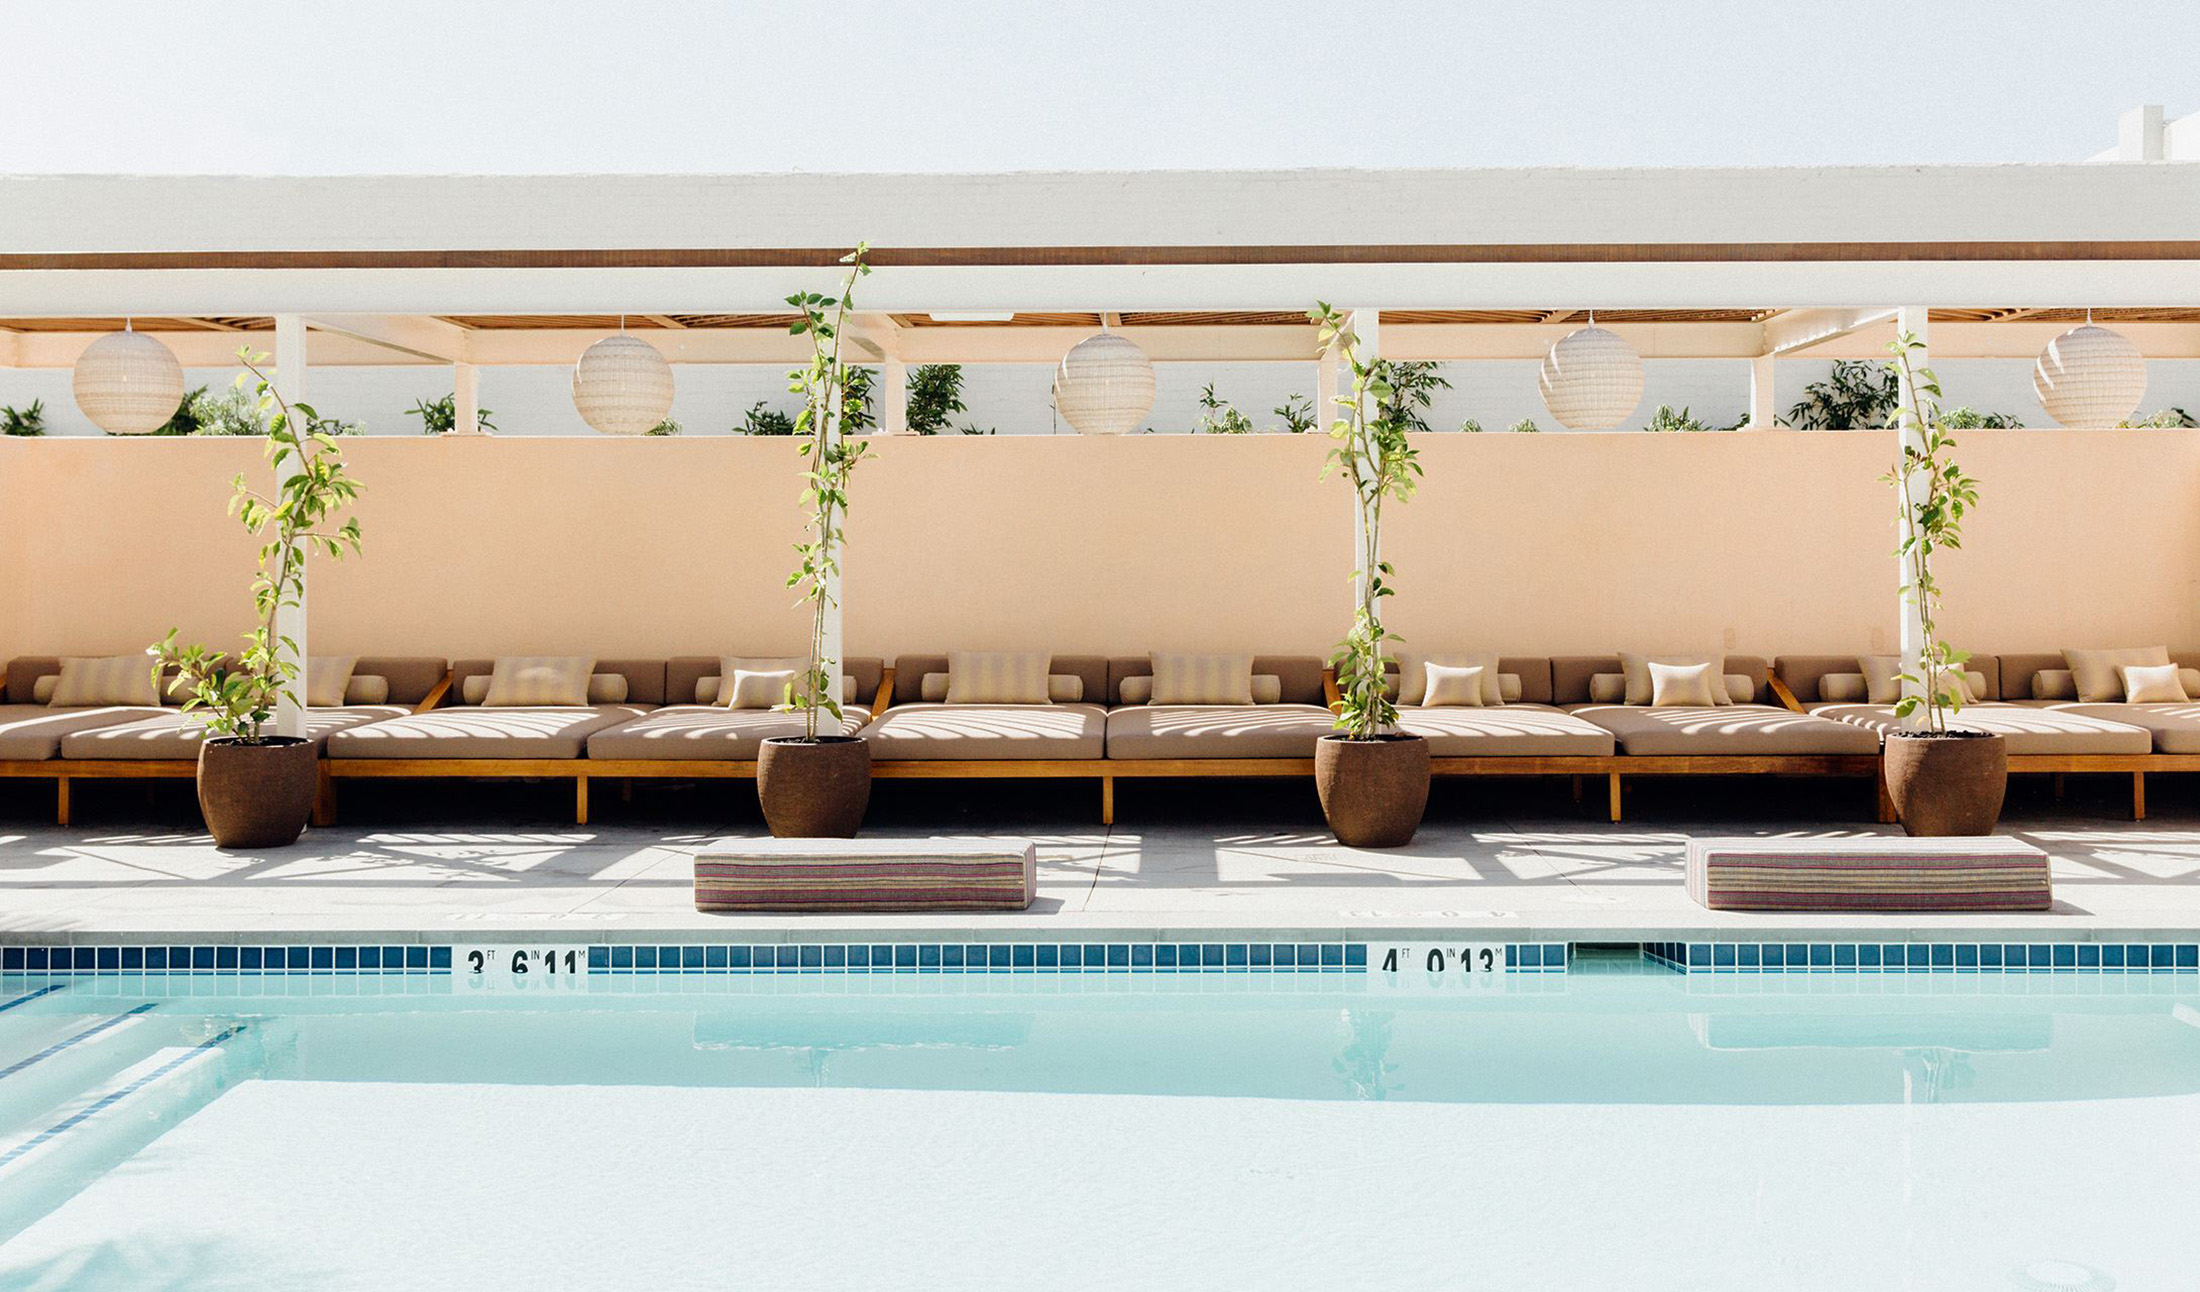 The Hotel June - Midcentury modern design hotel Los Angeles